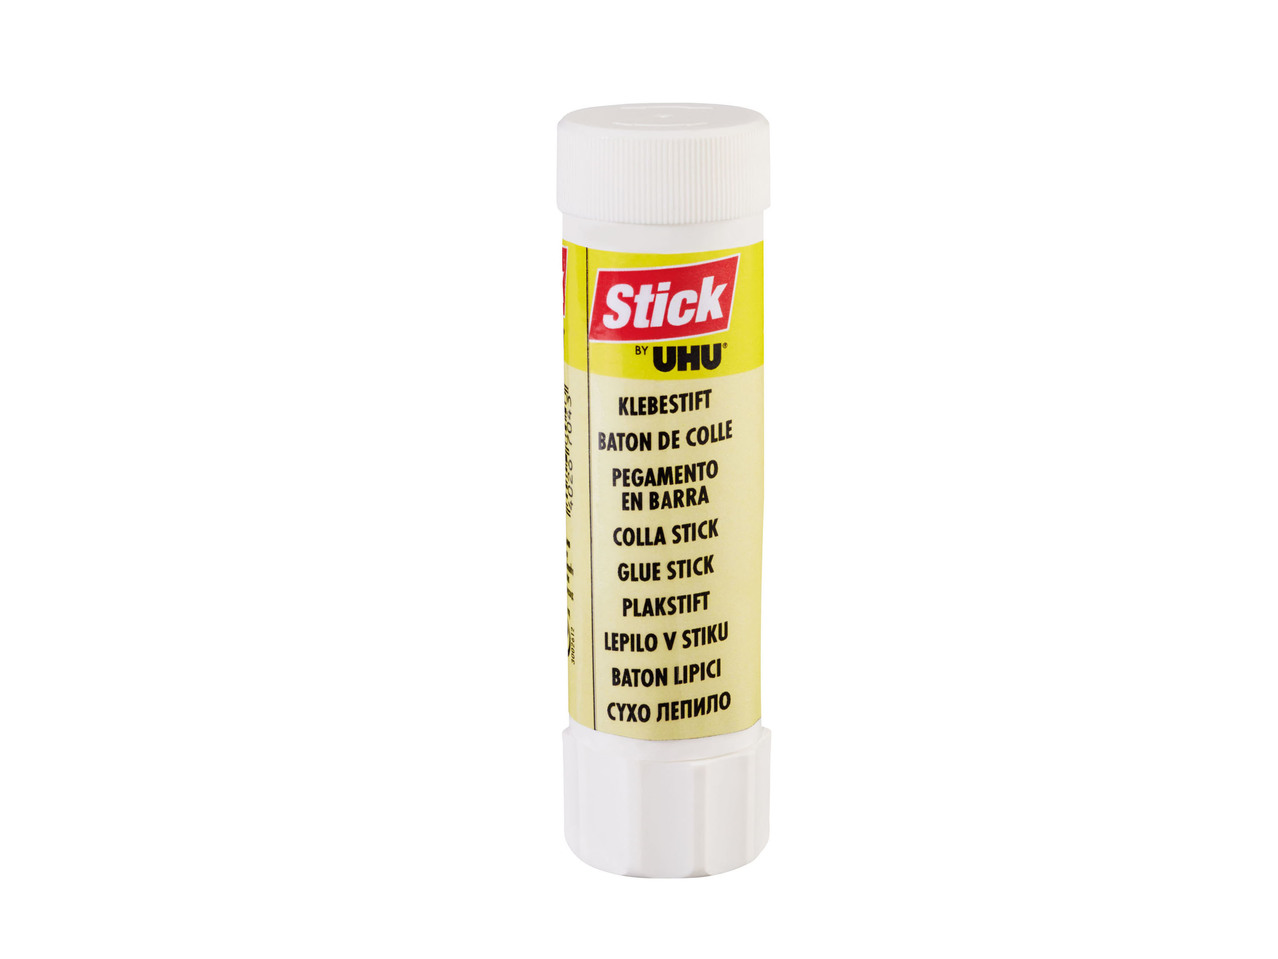 Glue or Sticky Tape